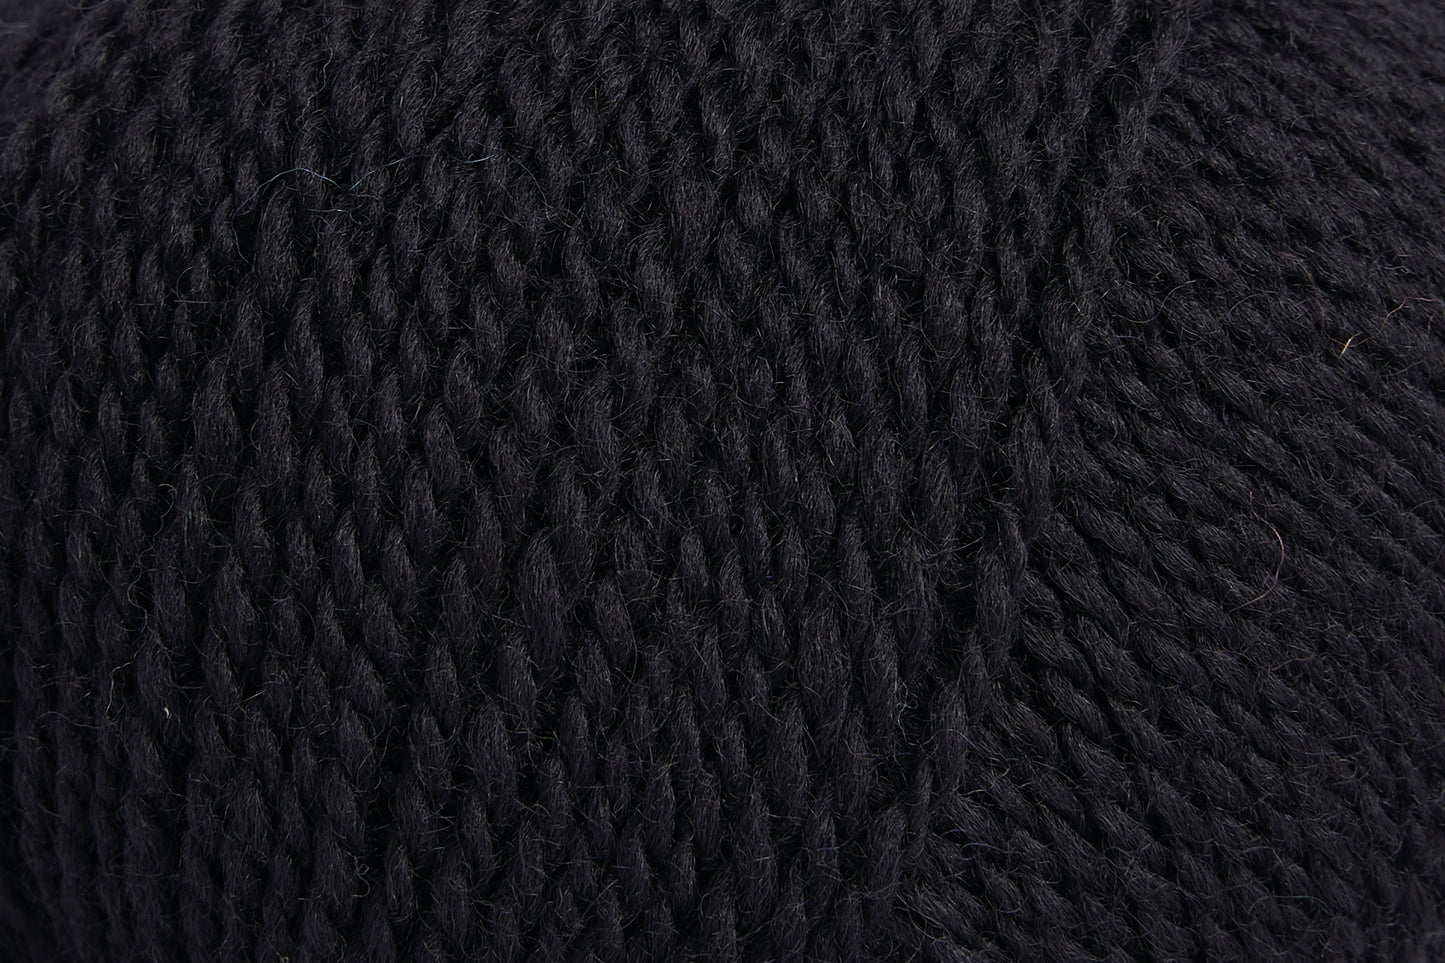 Rowan Norwegian Wool